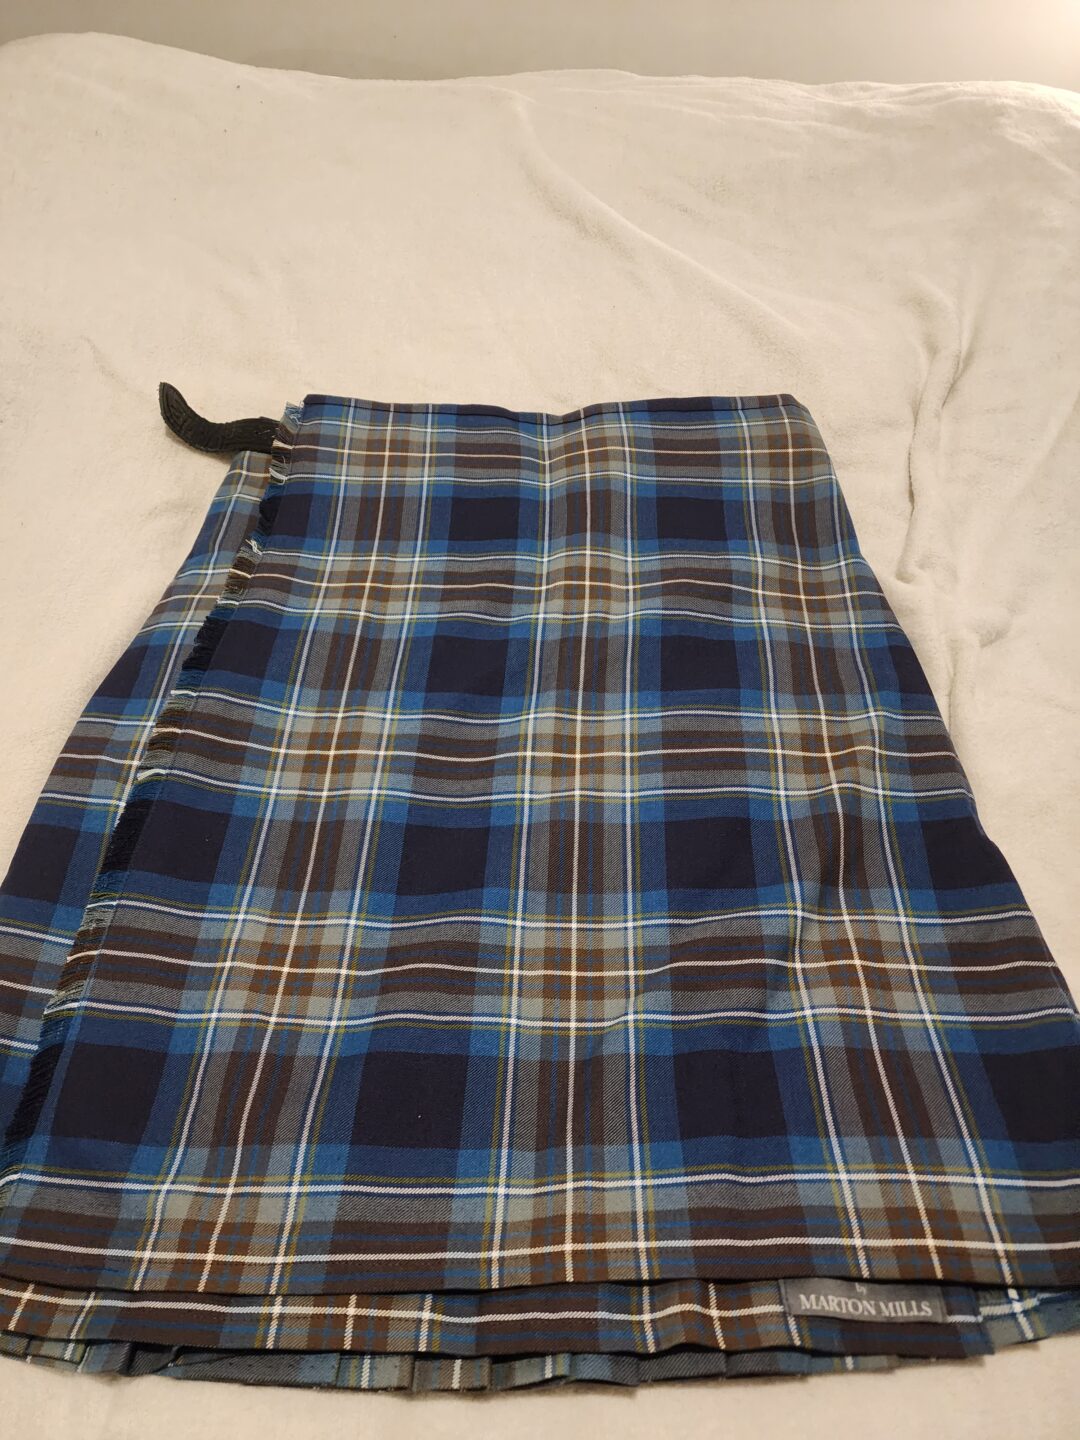 Bagpipe Central - Brand New Kilt Holyrood tartan